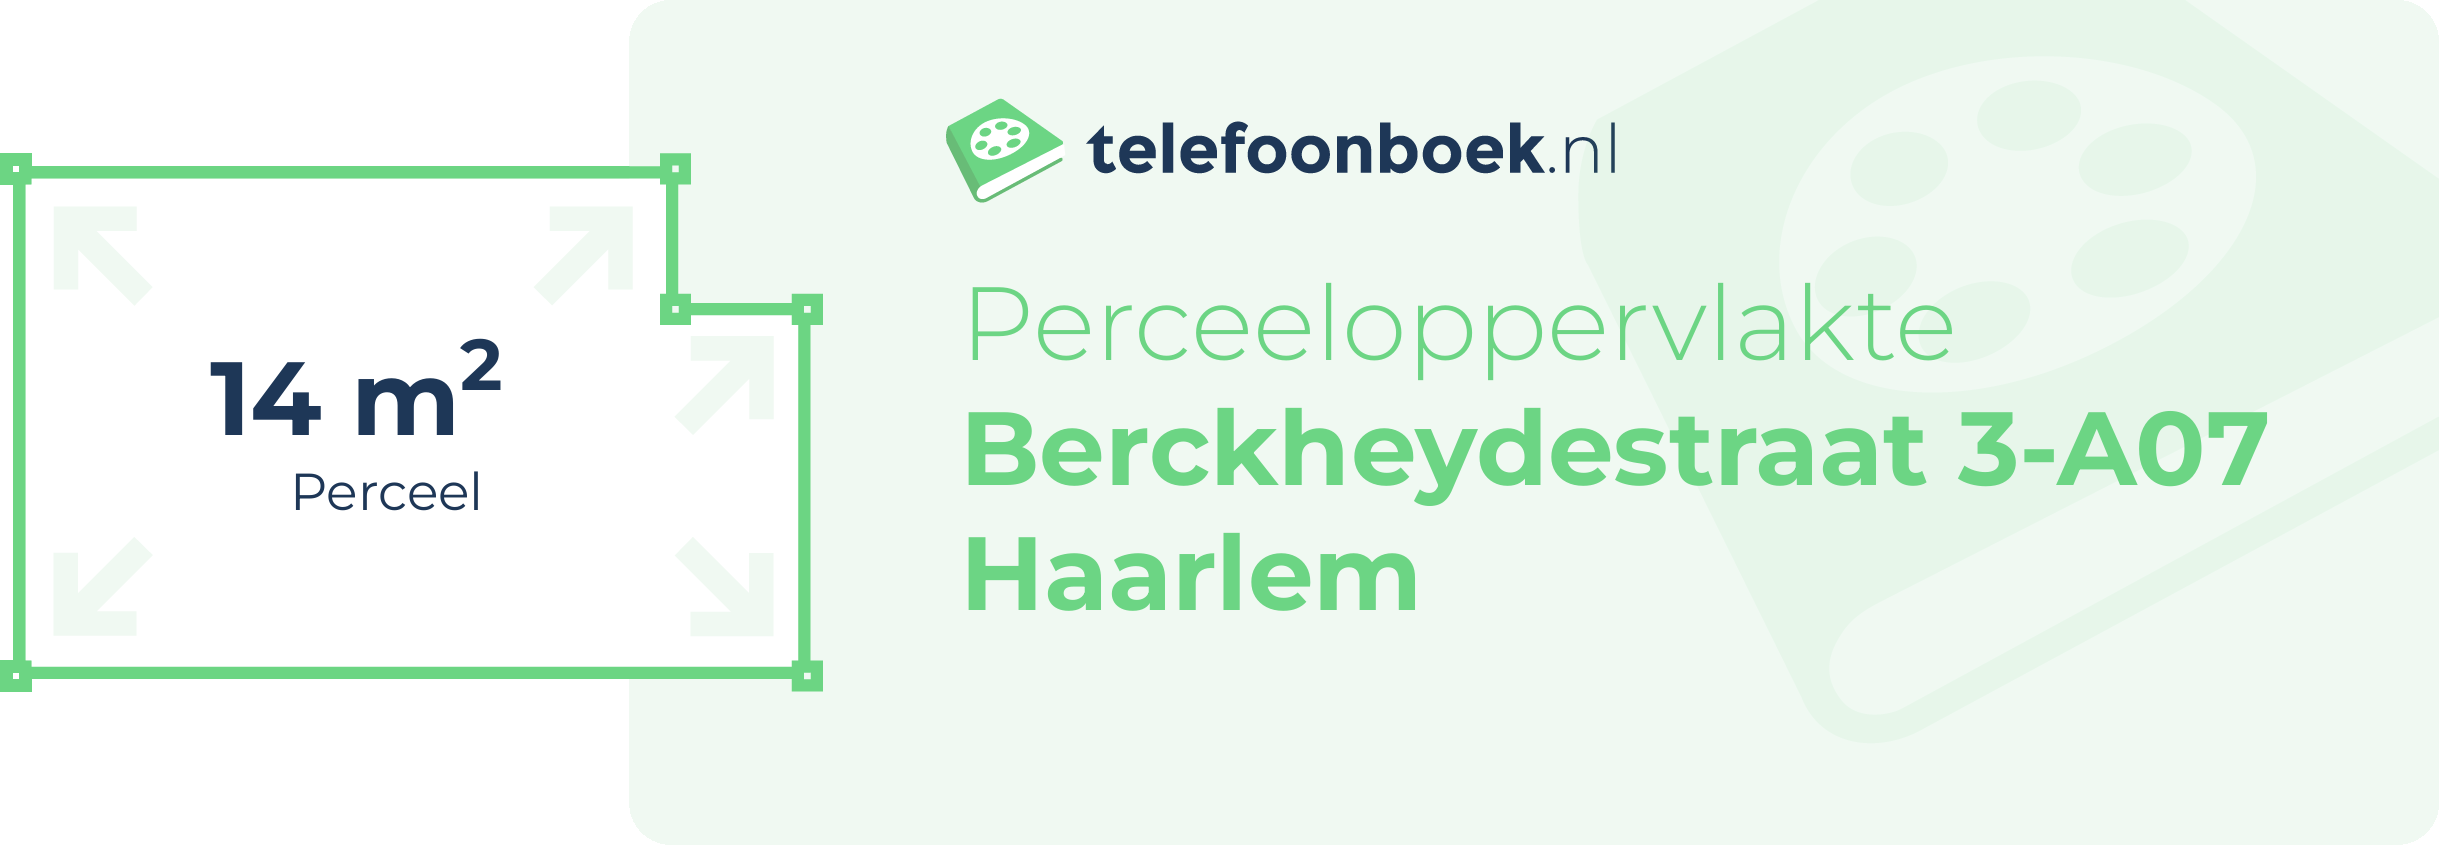 Perceeloppervlakte Berckheydestraat 3-A07 Haarlem